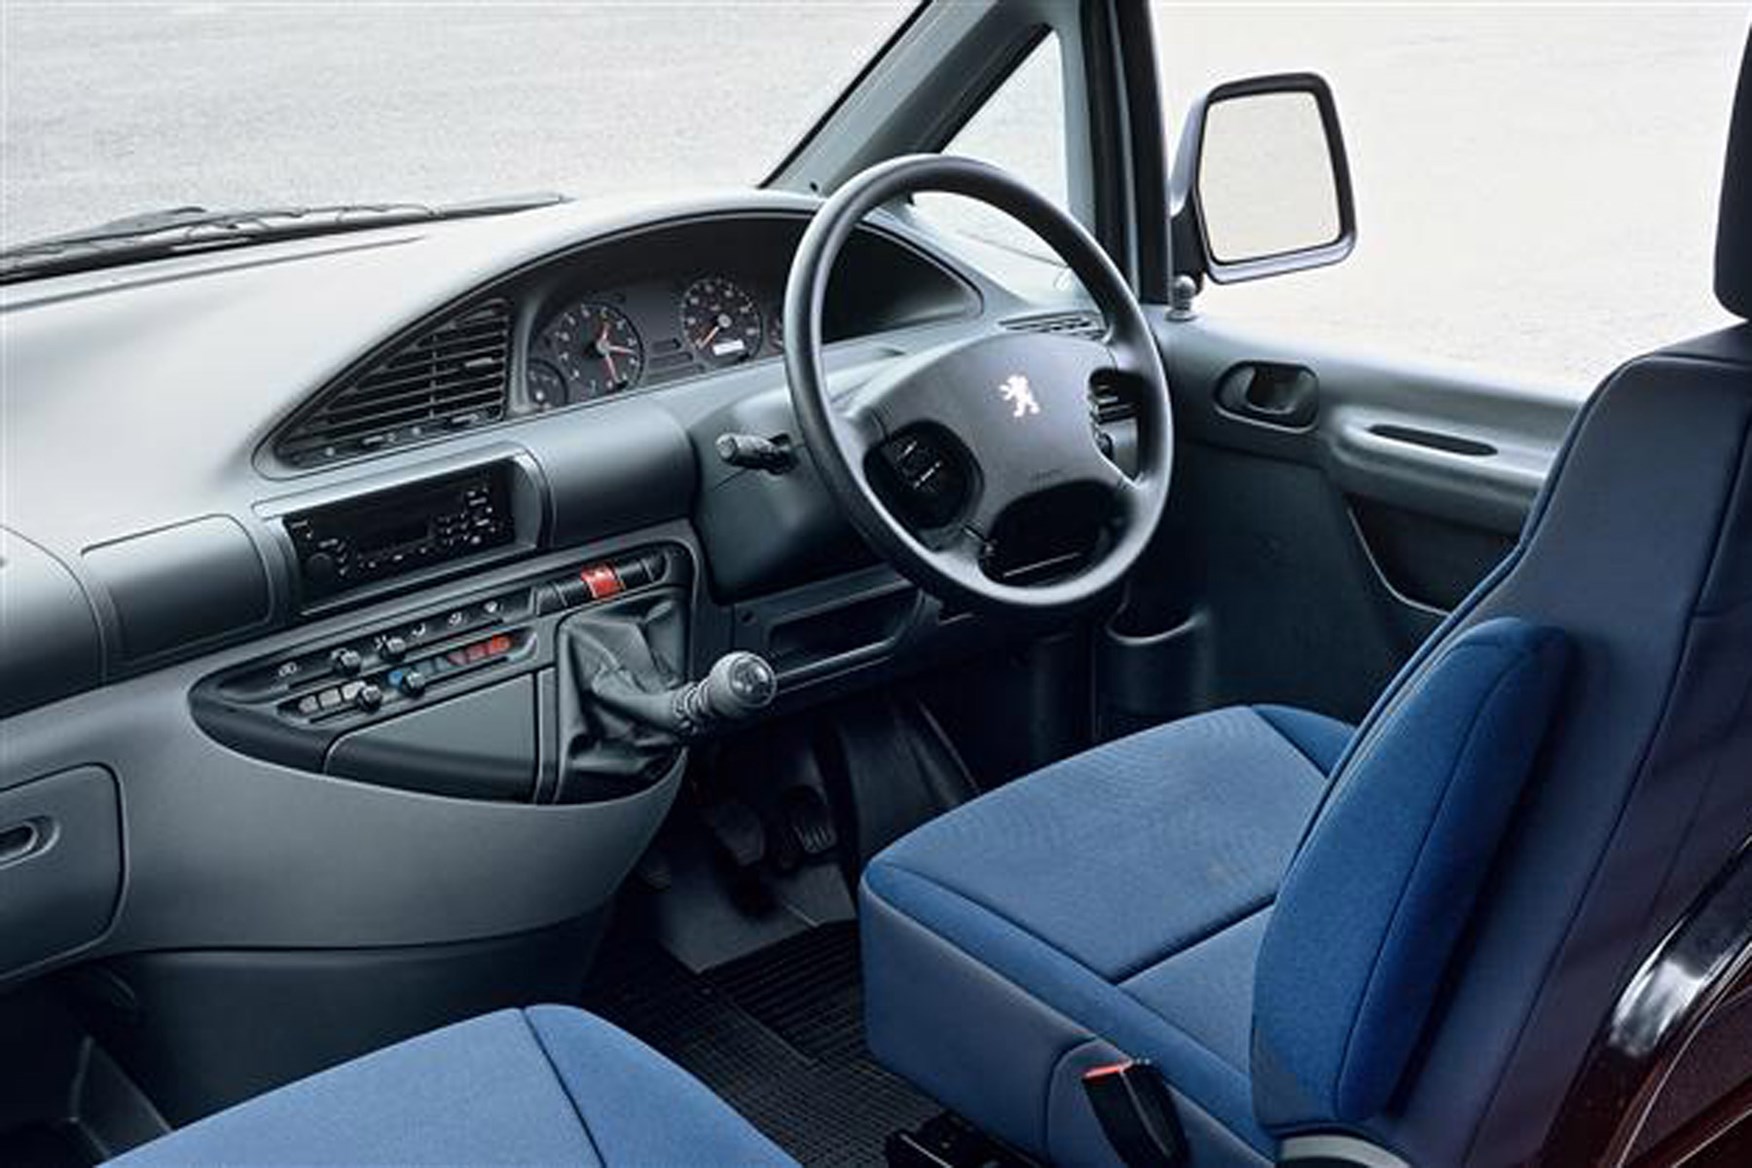 Peugeot Expert review on Parkers Vans - cabin, interior